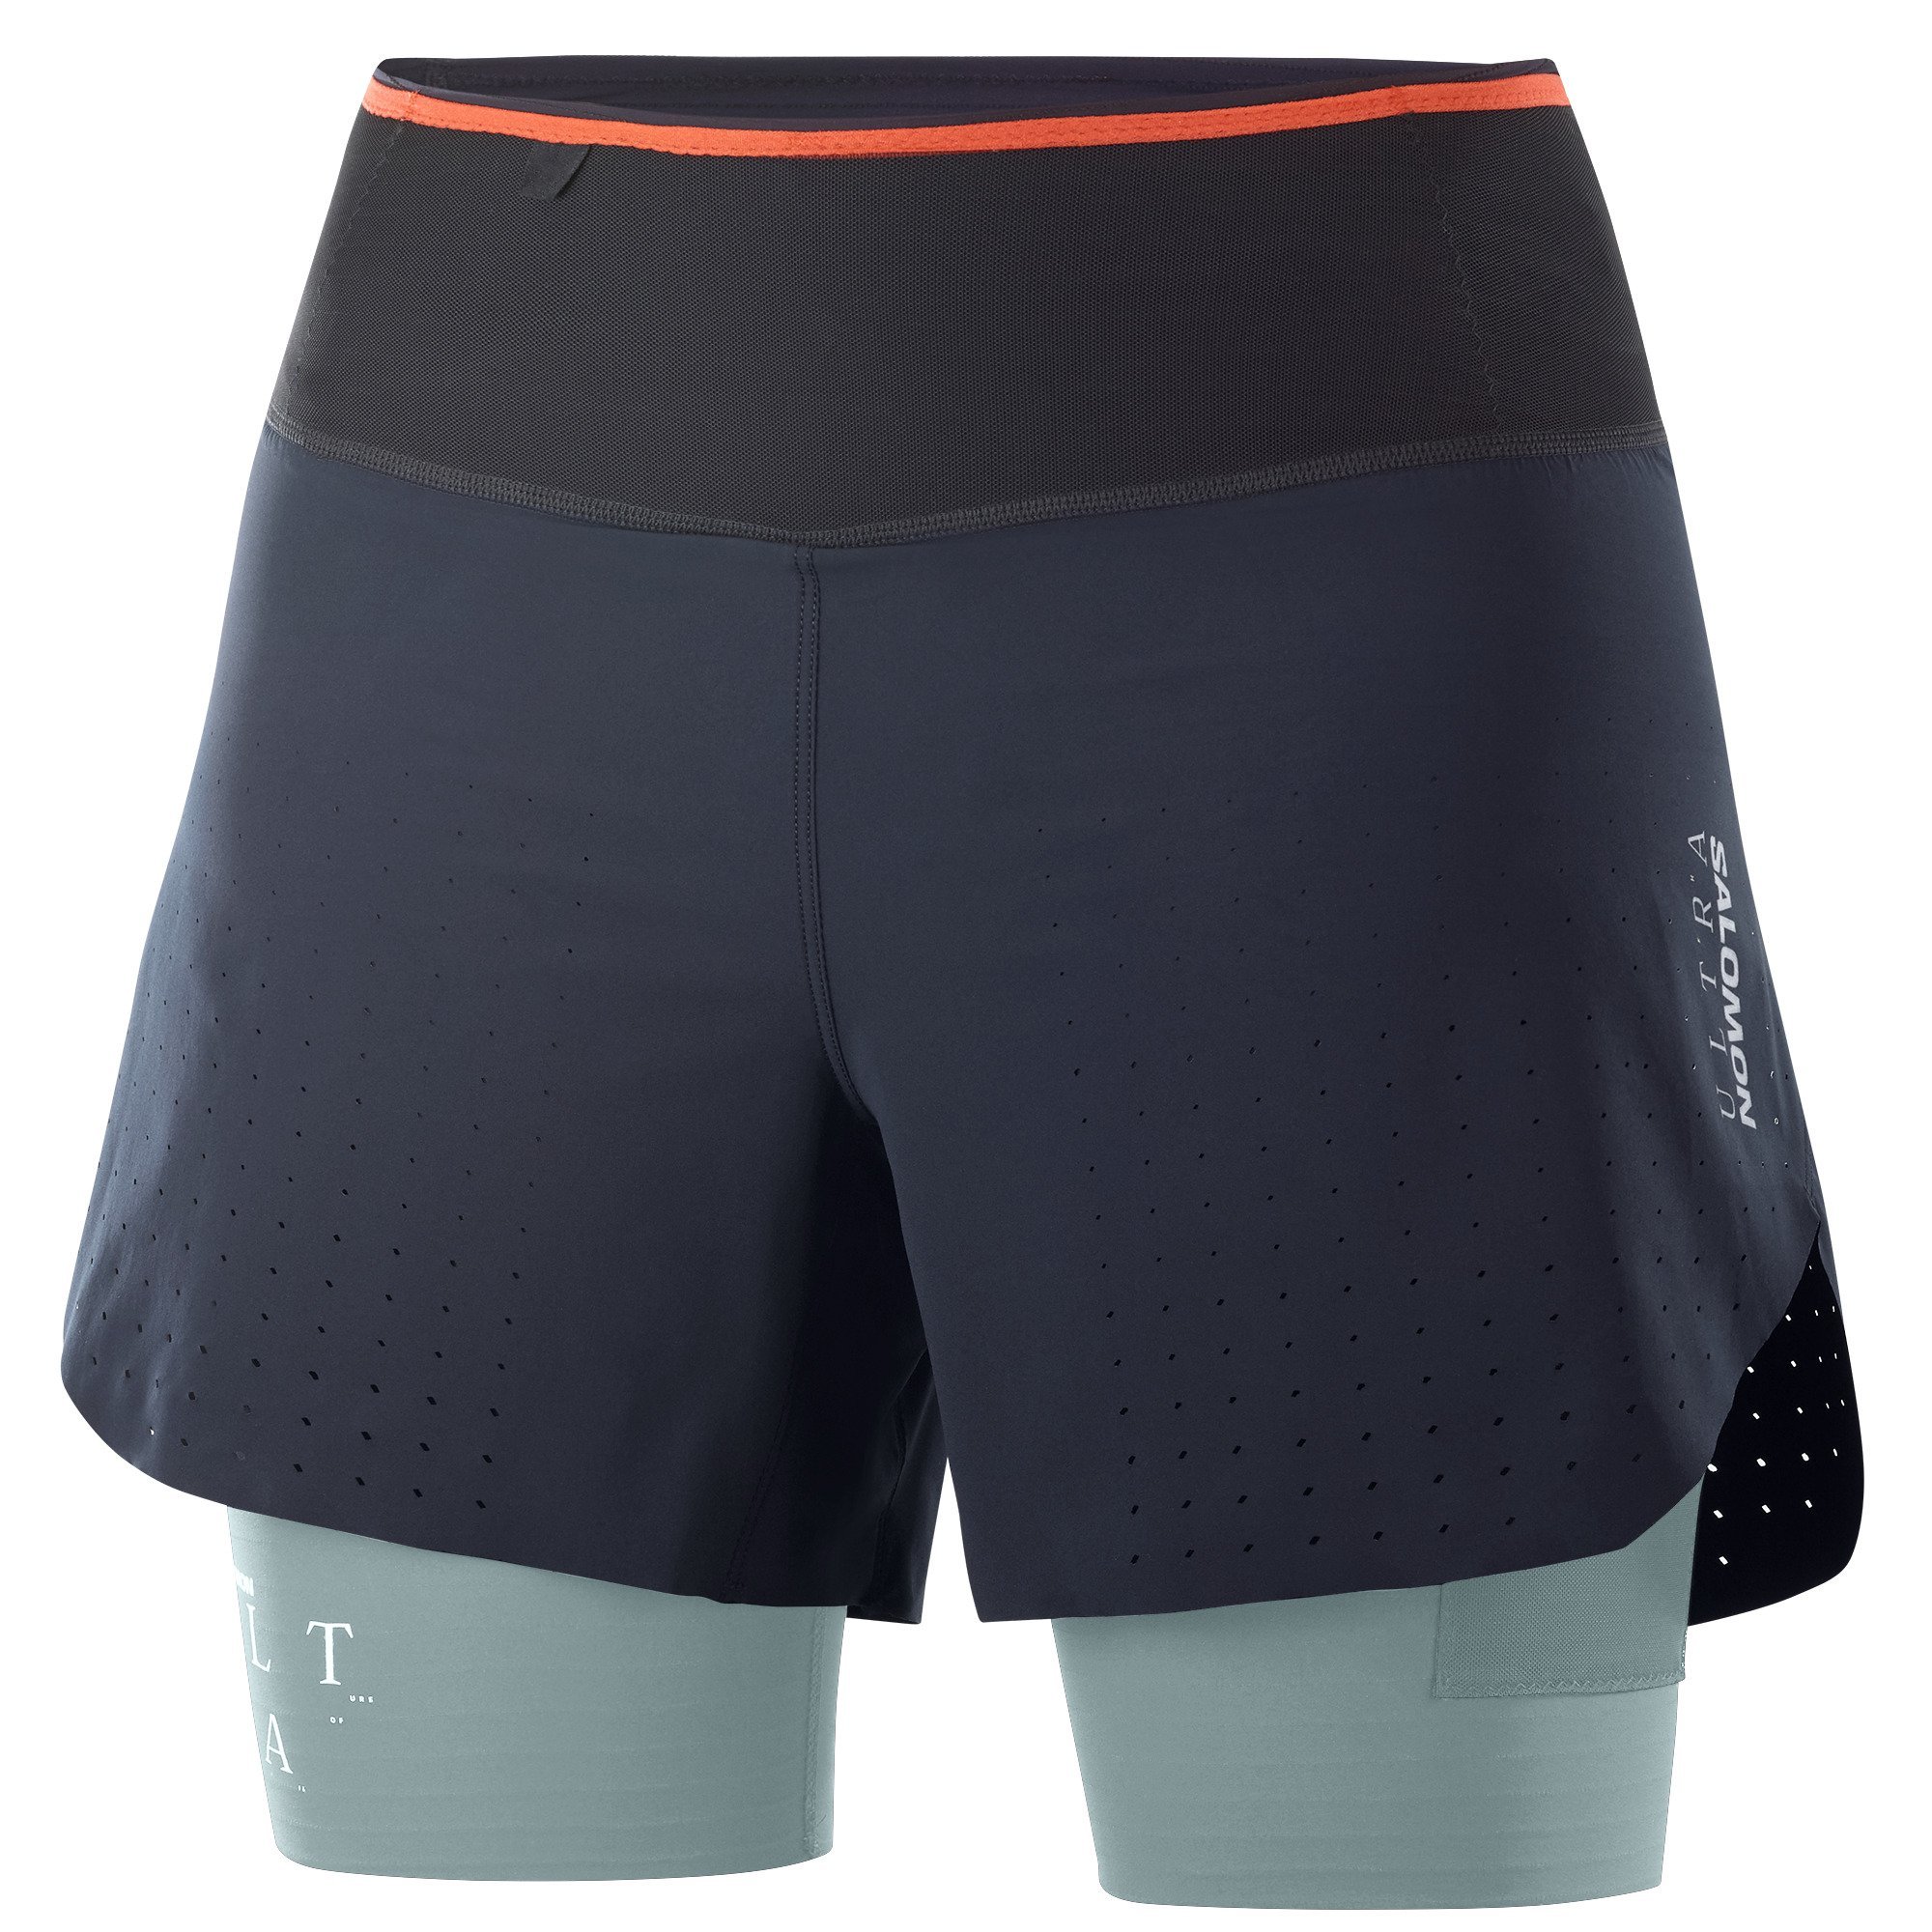 Šortky Salomon S/LAB Ultra 2IN1 Shorts W - modrá